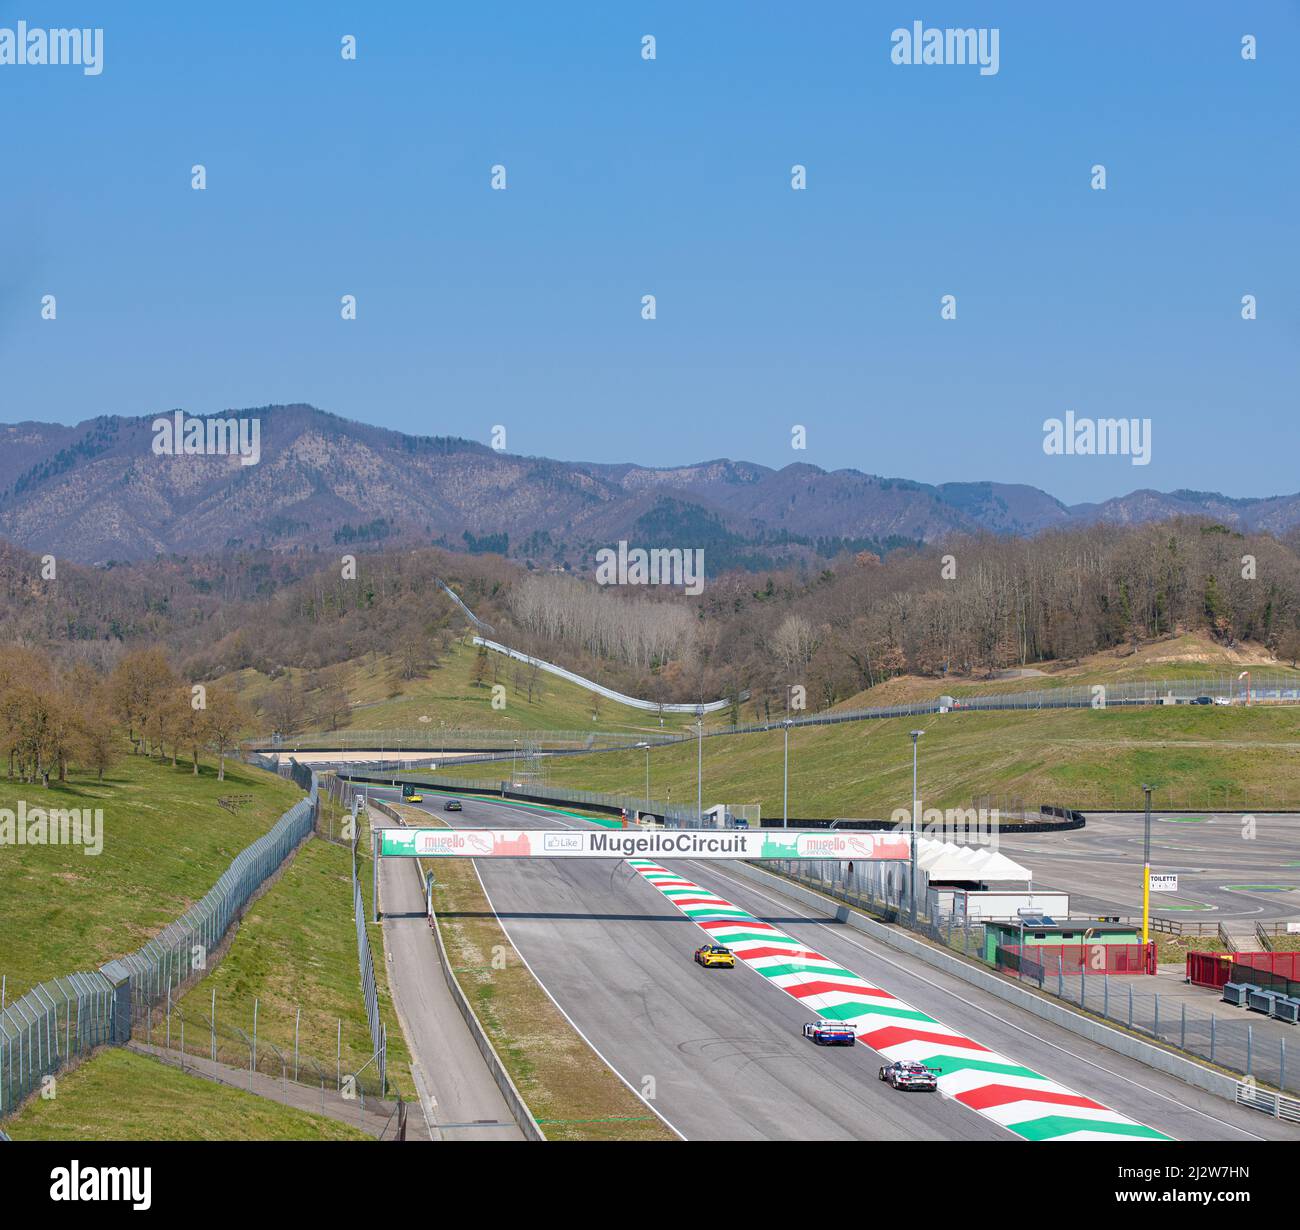 Circuito de circuito de Mugello Gran vista del paisaje con coches en asfalto pista copiar espacio en el cielo. Mugello, Italia, 26 2022 de marzo, serie de 24 horas Foto de stock